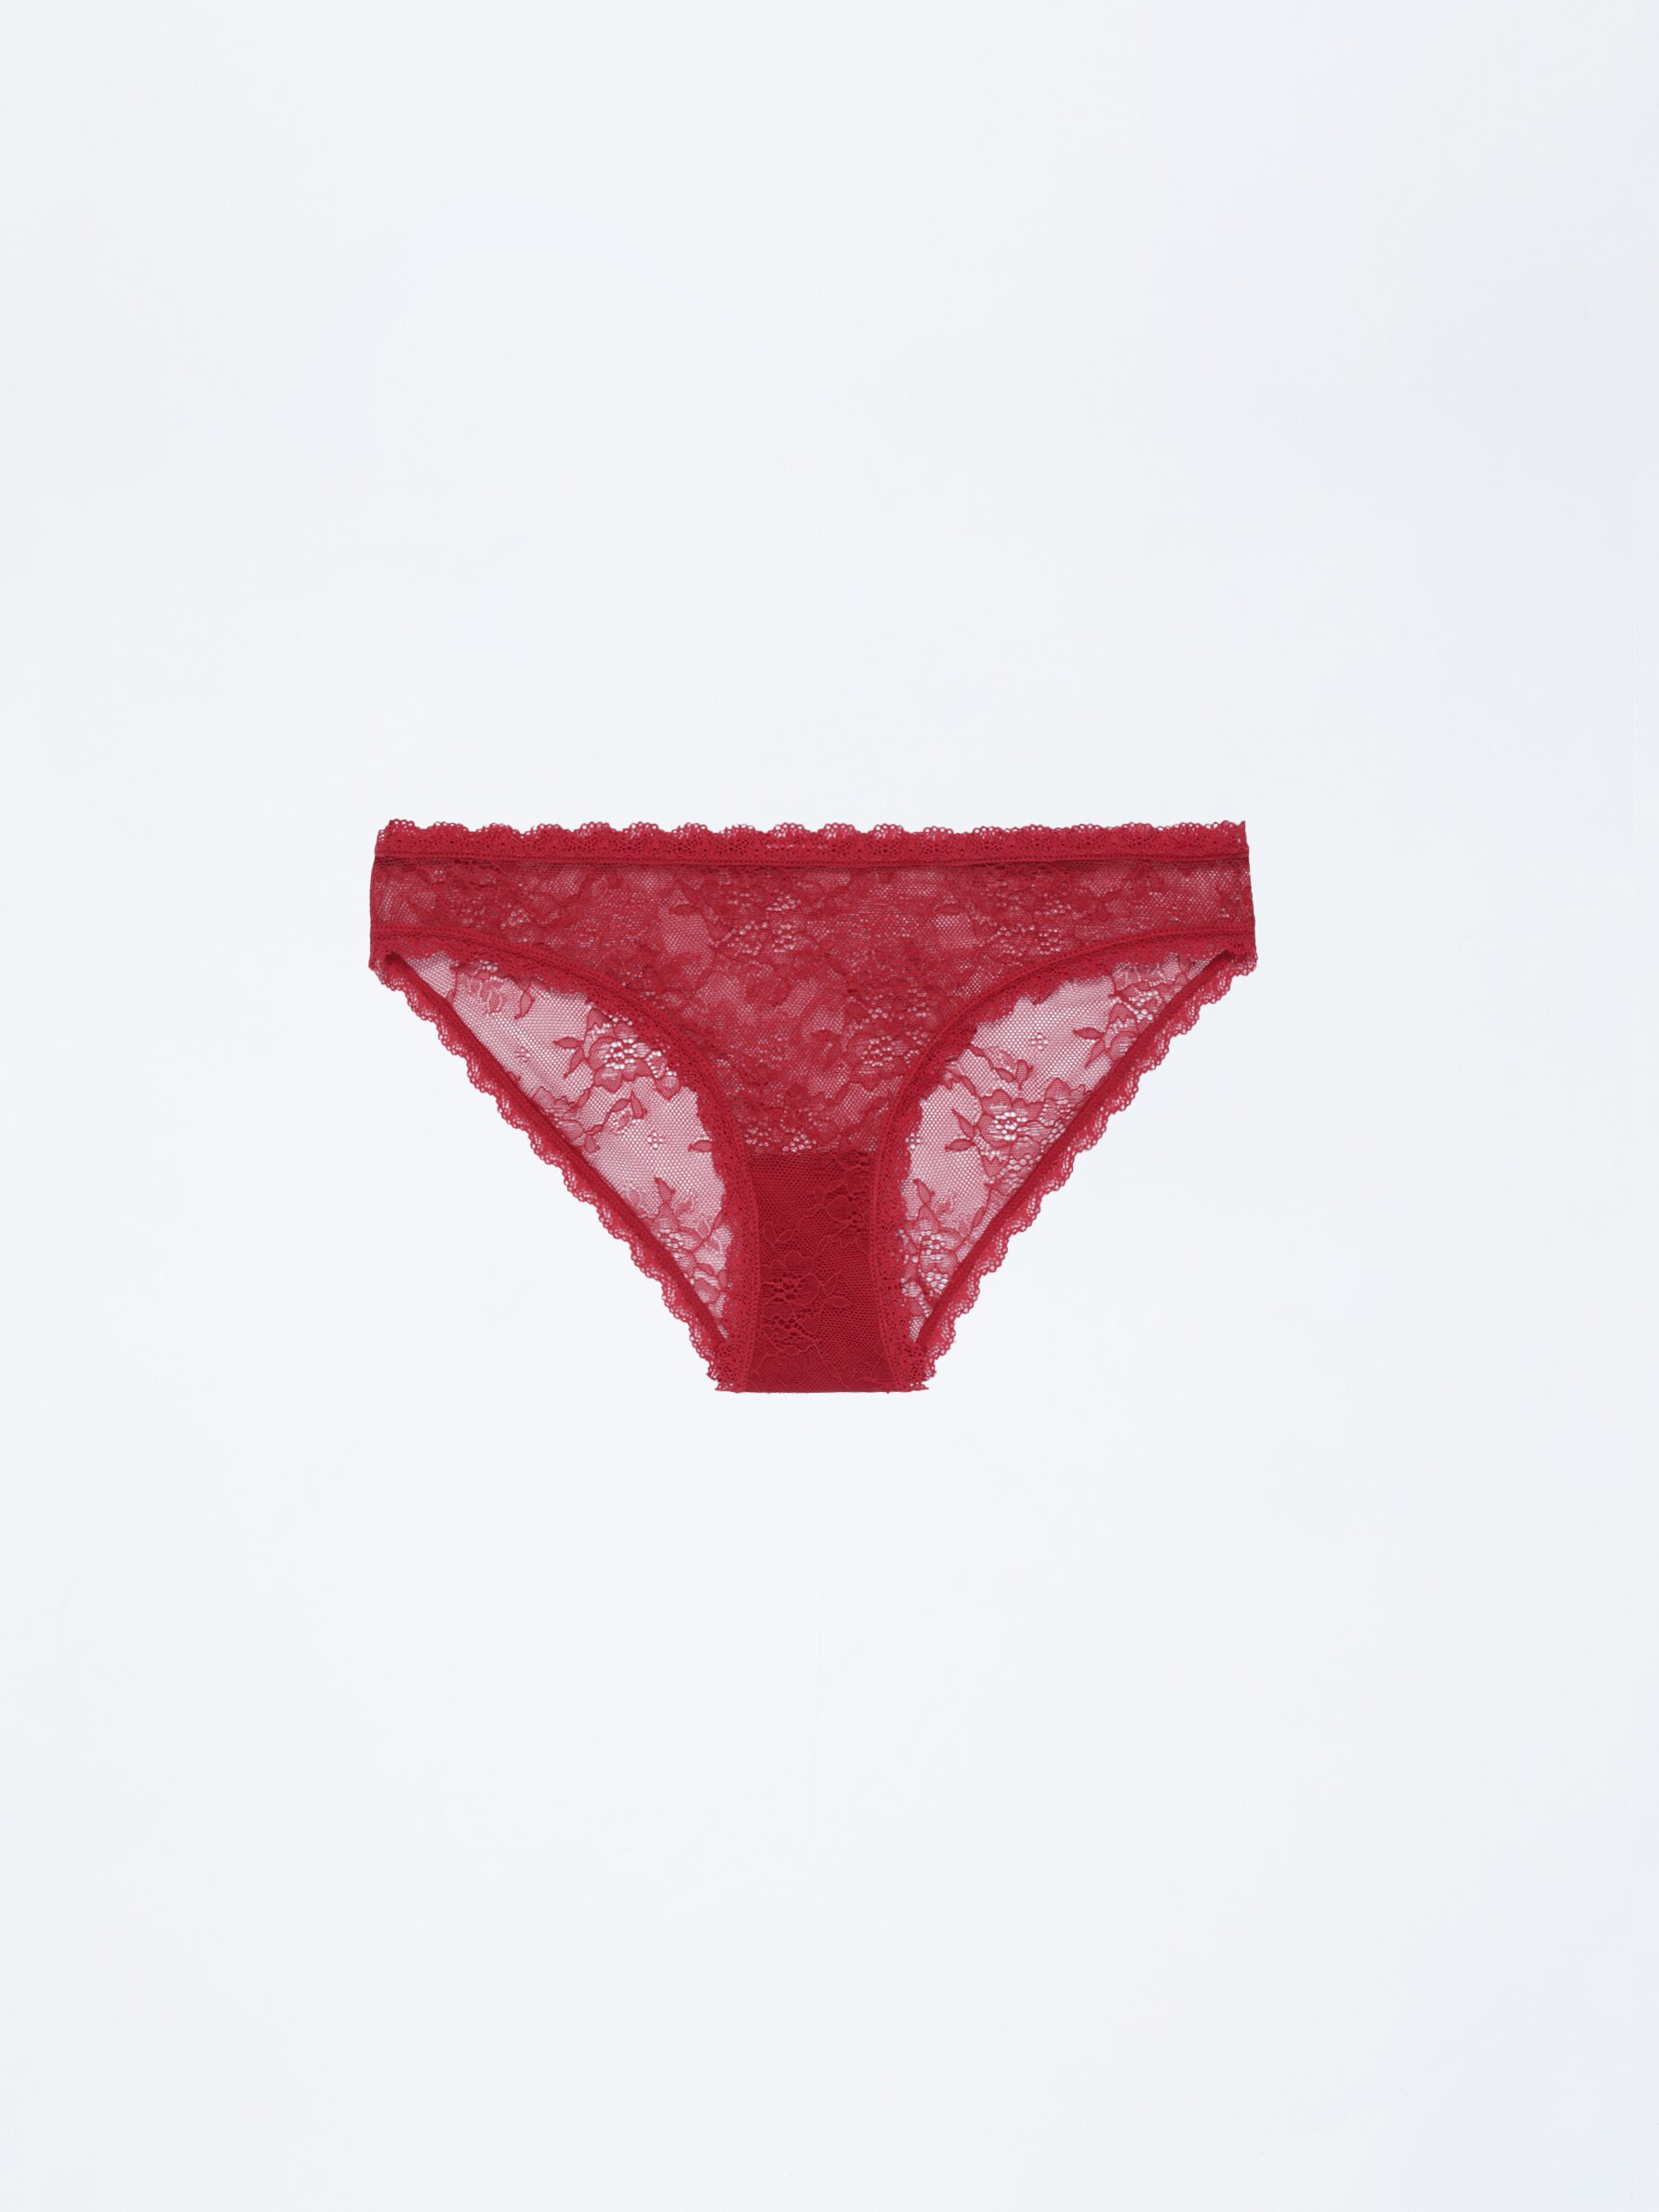 Women`s Lace Underwear Gentle Pink Color: Bra and Panties. Stock